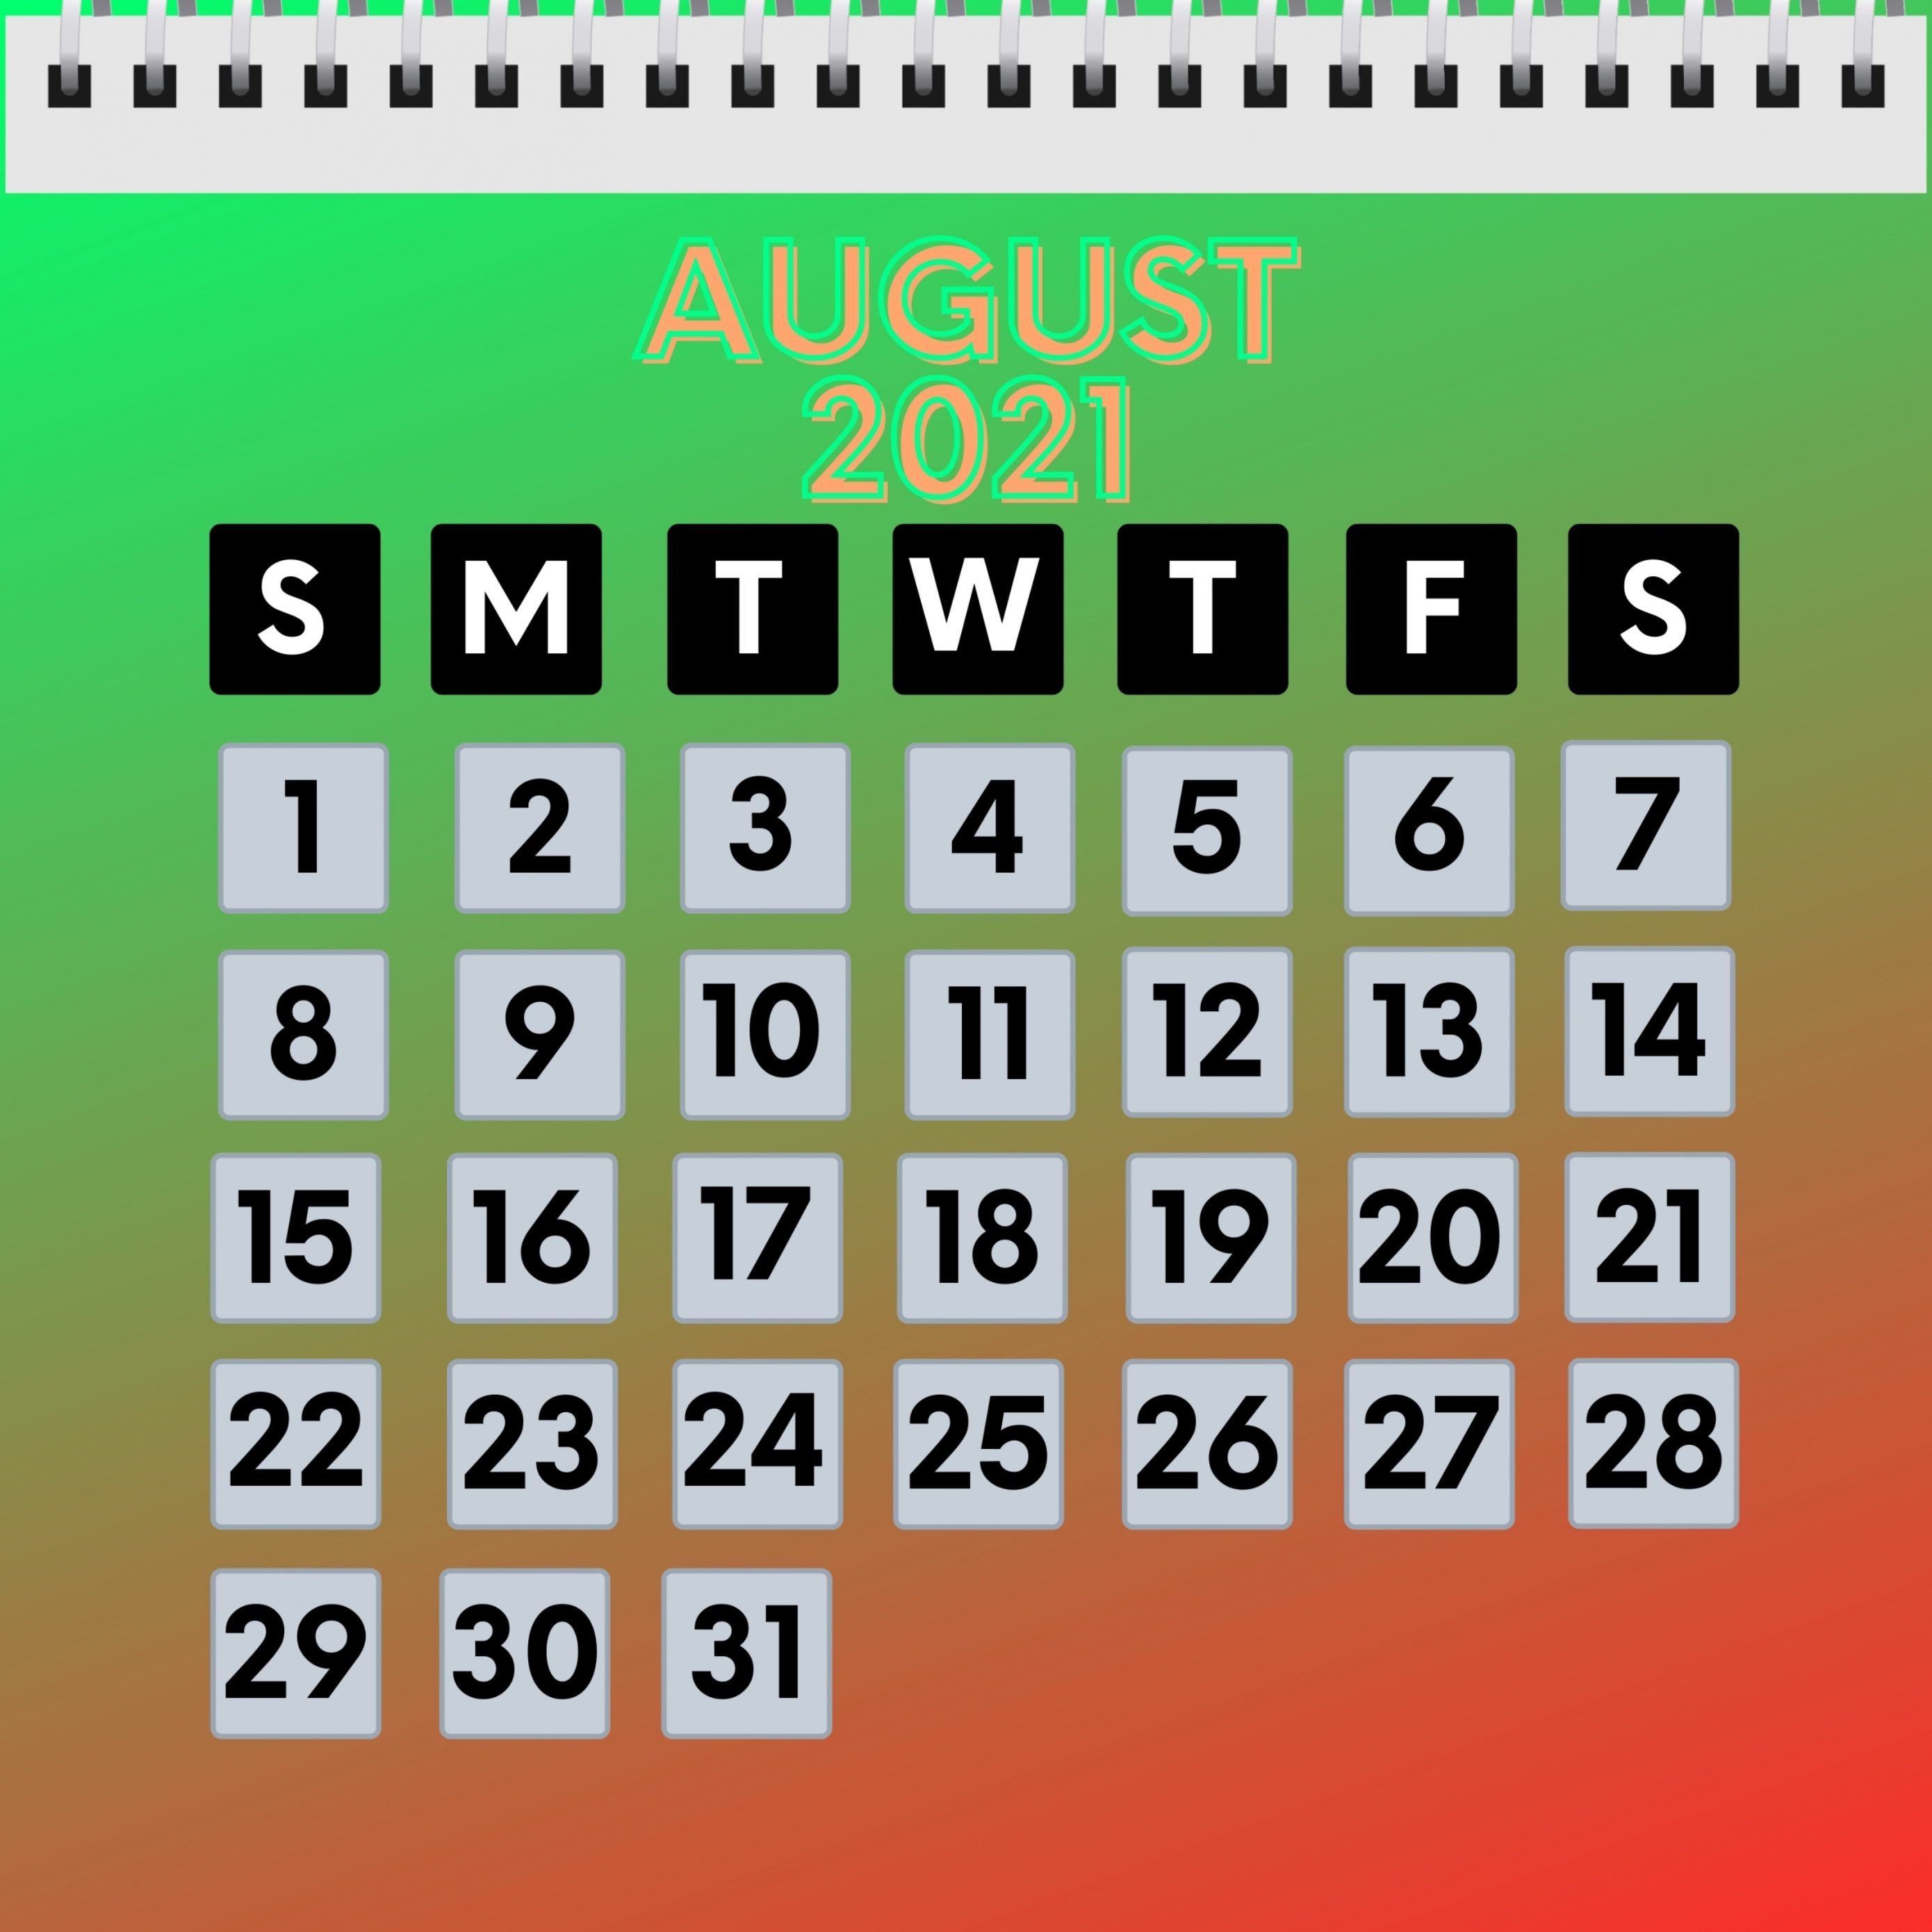 2780x2780 Parallax wallpaper 4k August 2021 Calendar iPad Wallpaper 2780x2780 pixels resolution